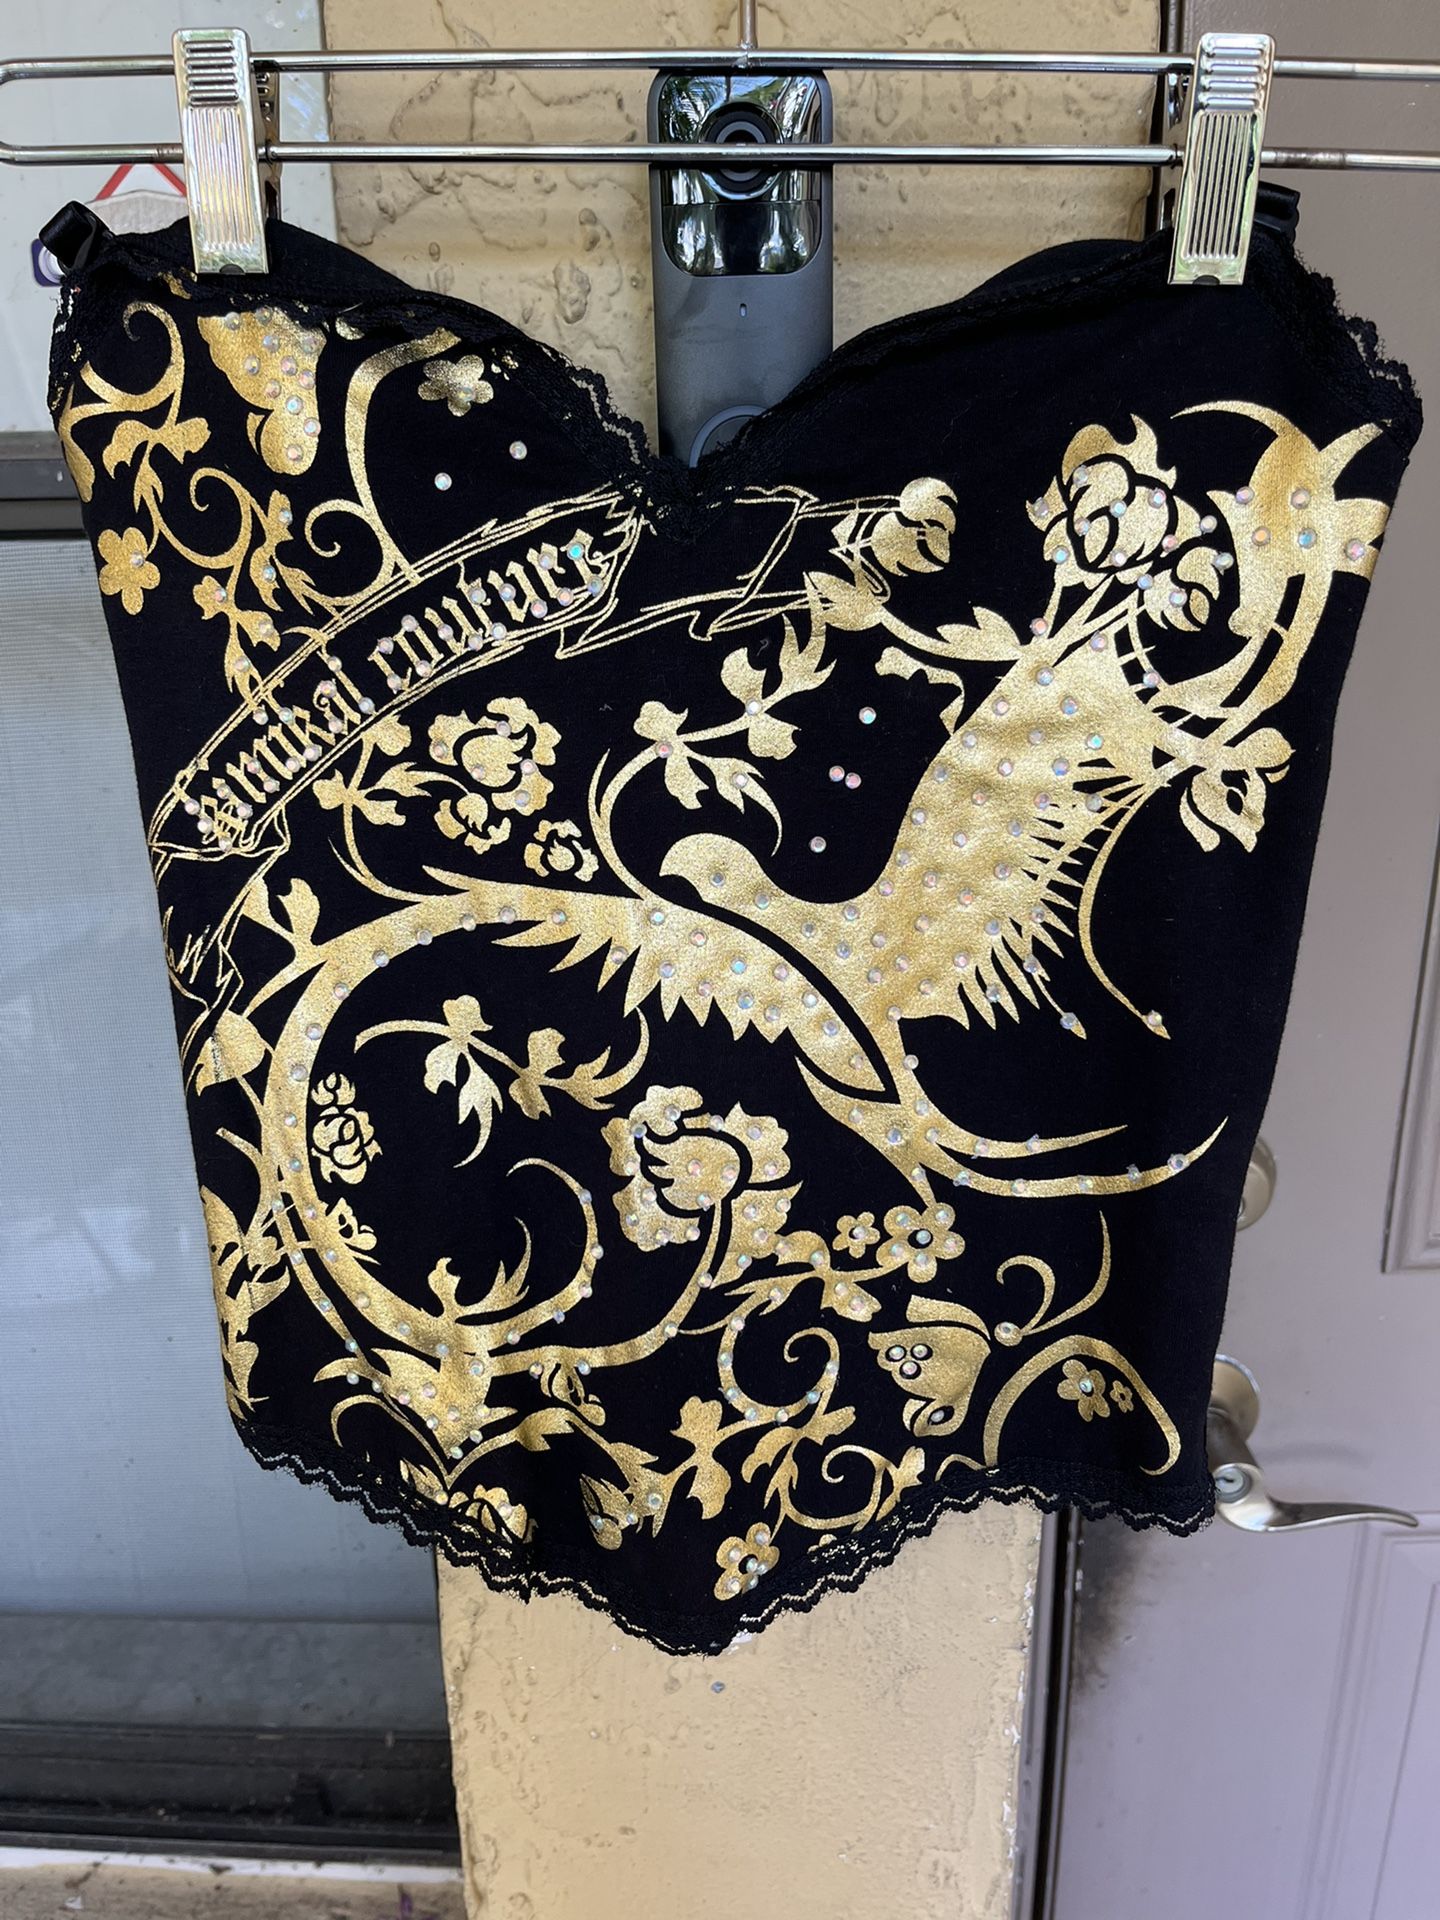 Embellished corset by Kimikal